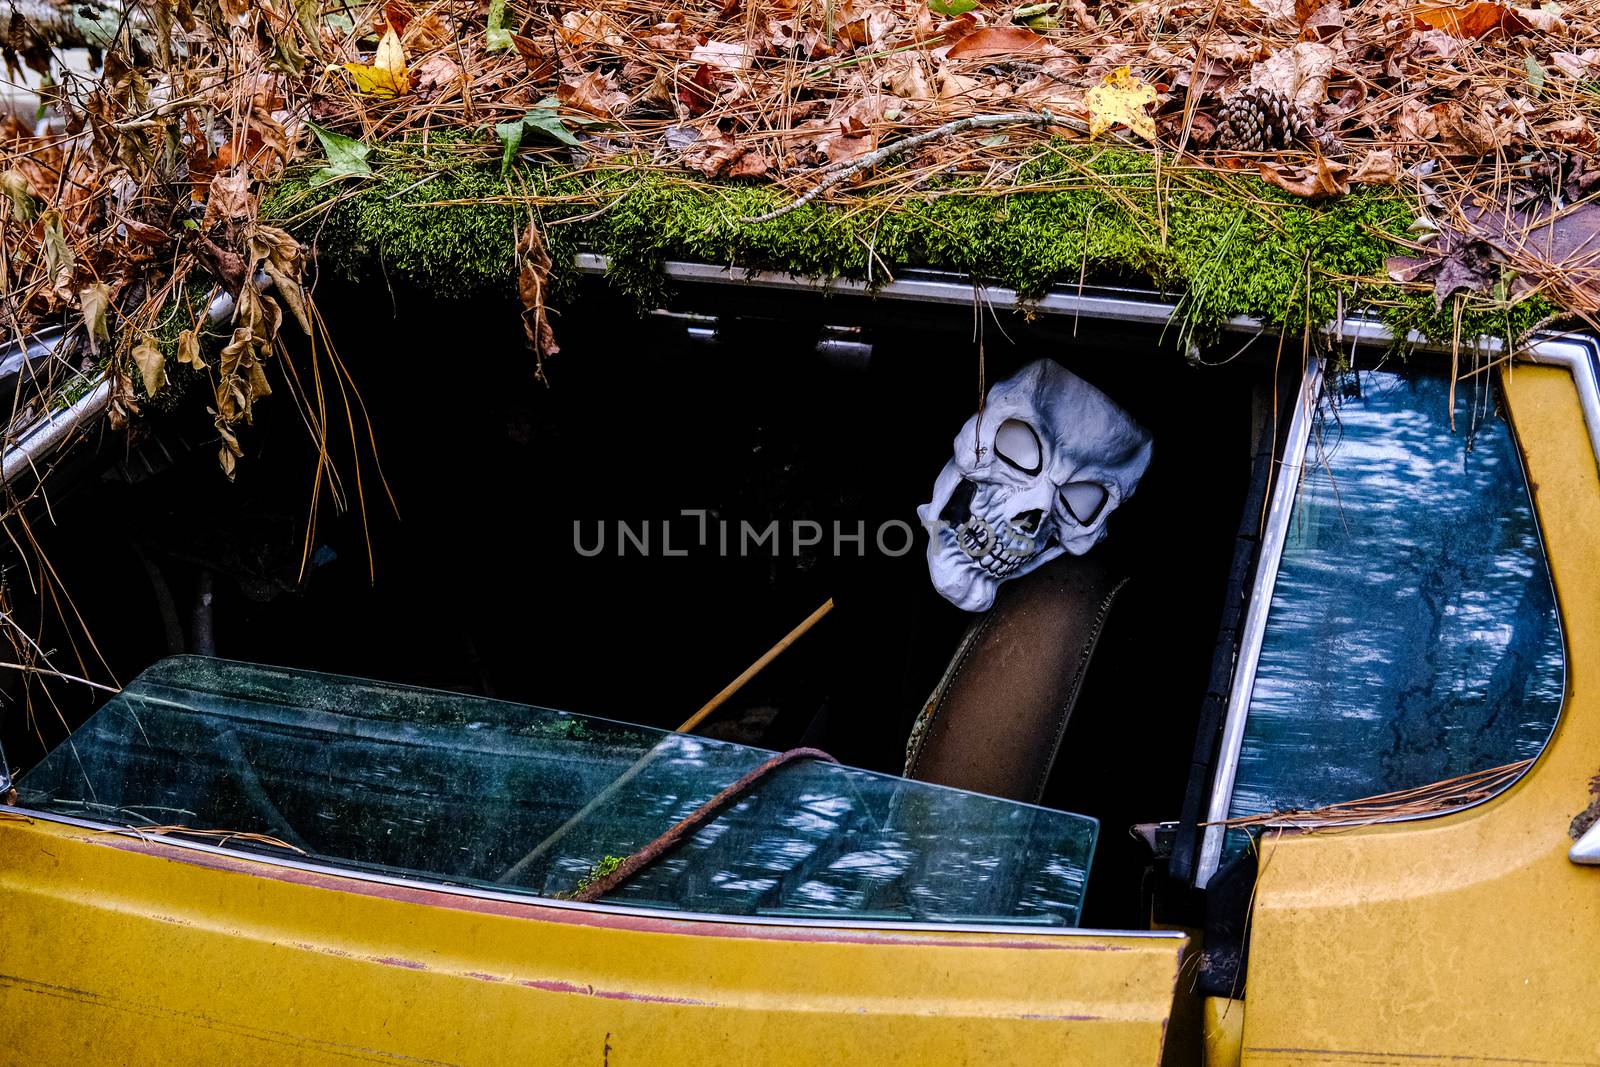 Skull Mask in Wrecked Car in a Junkyard